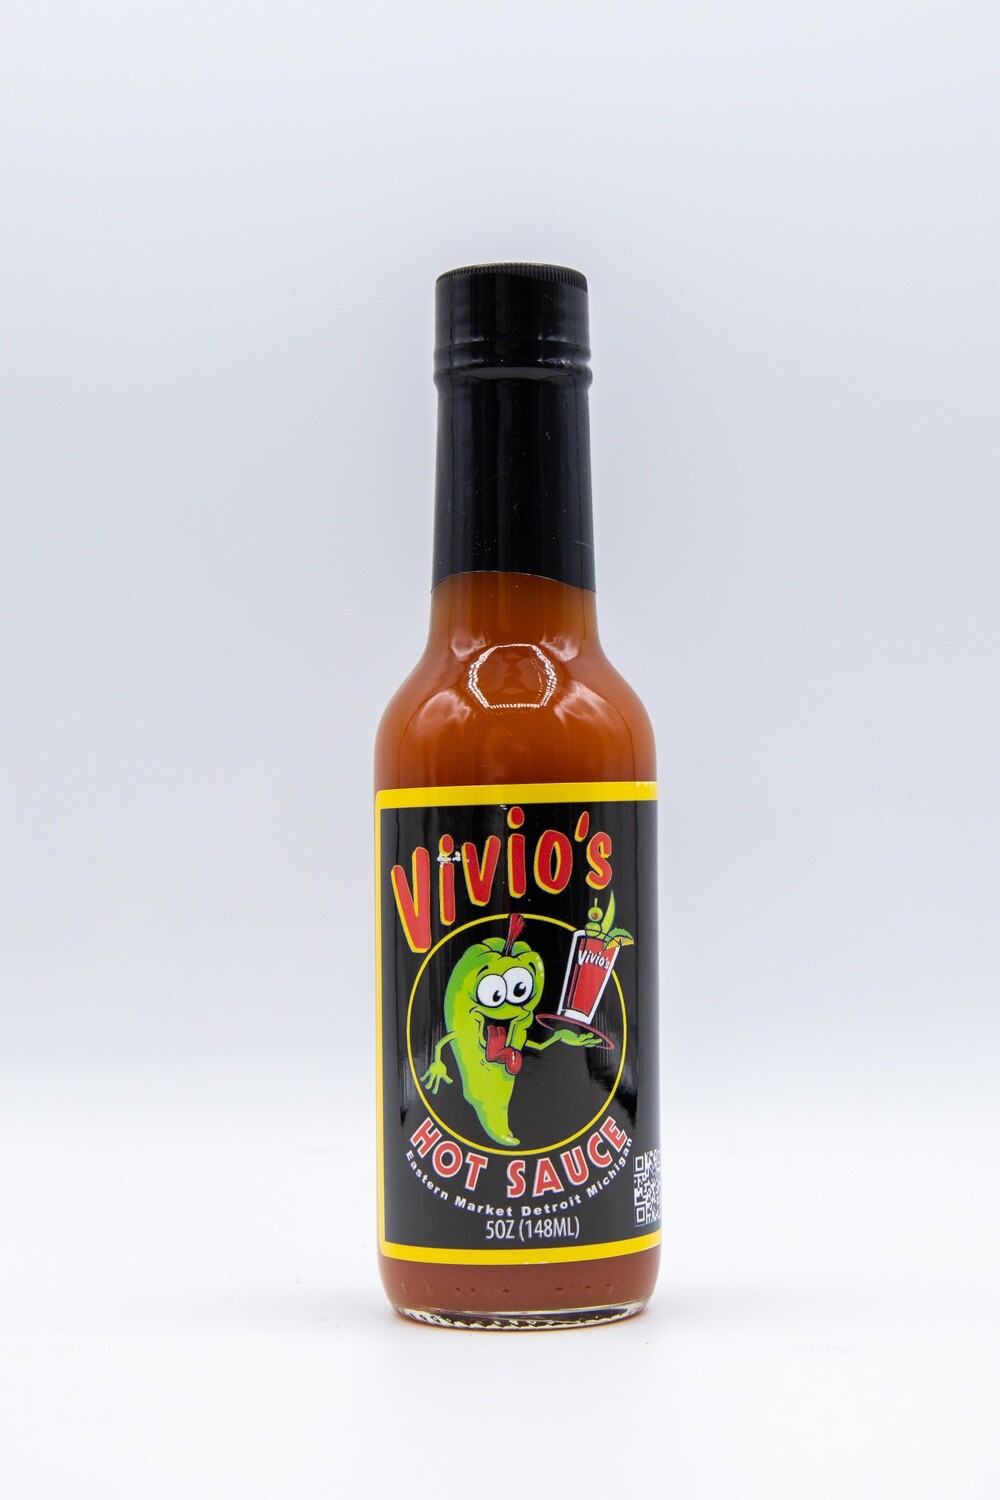 Vivio's Hot Sauce